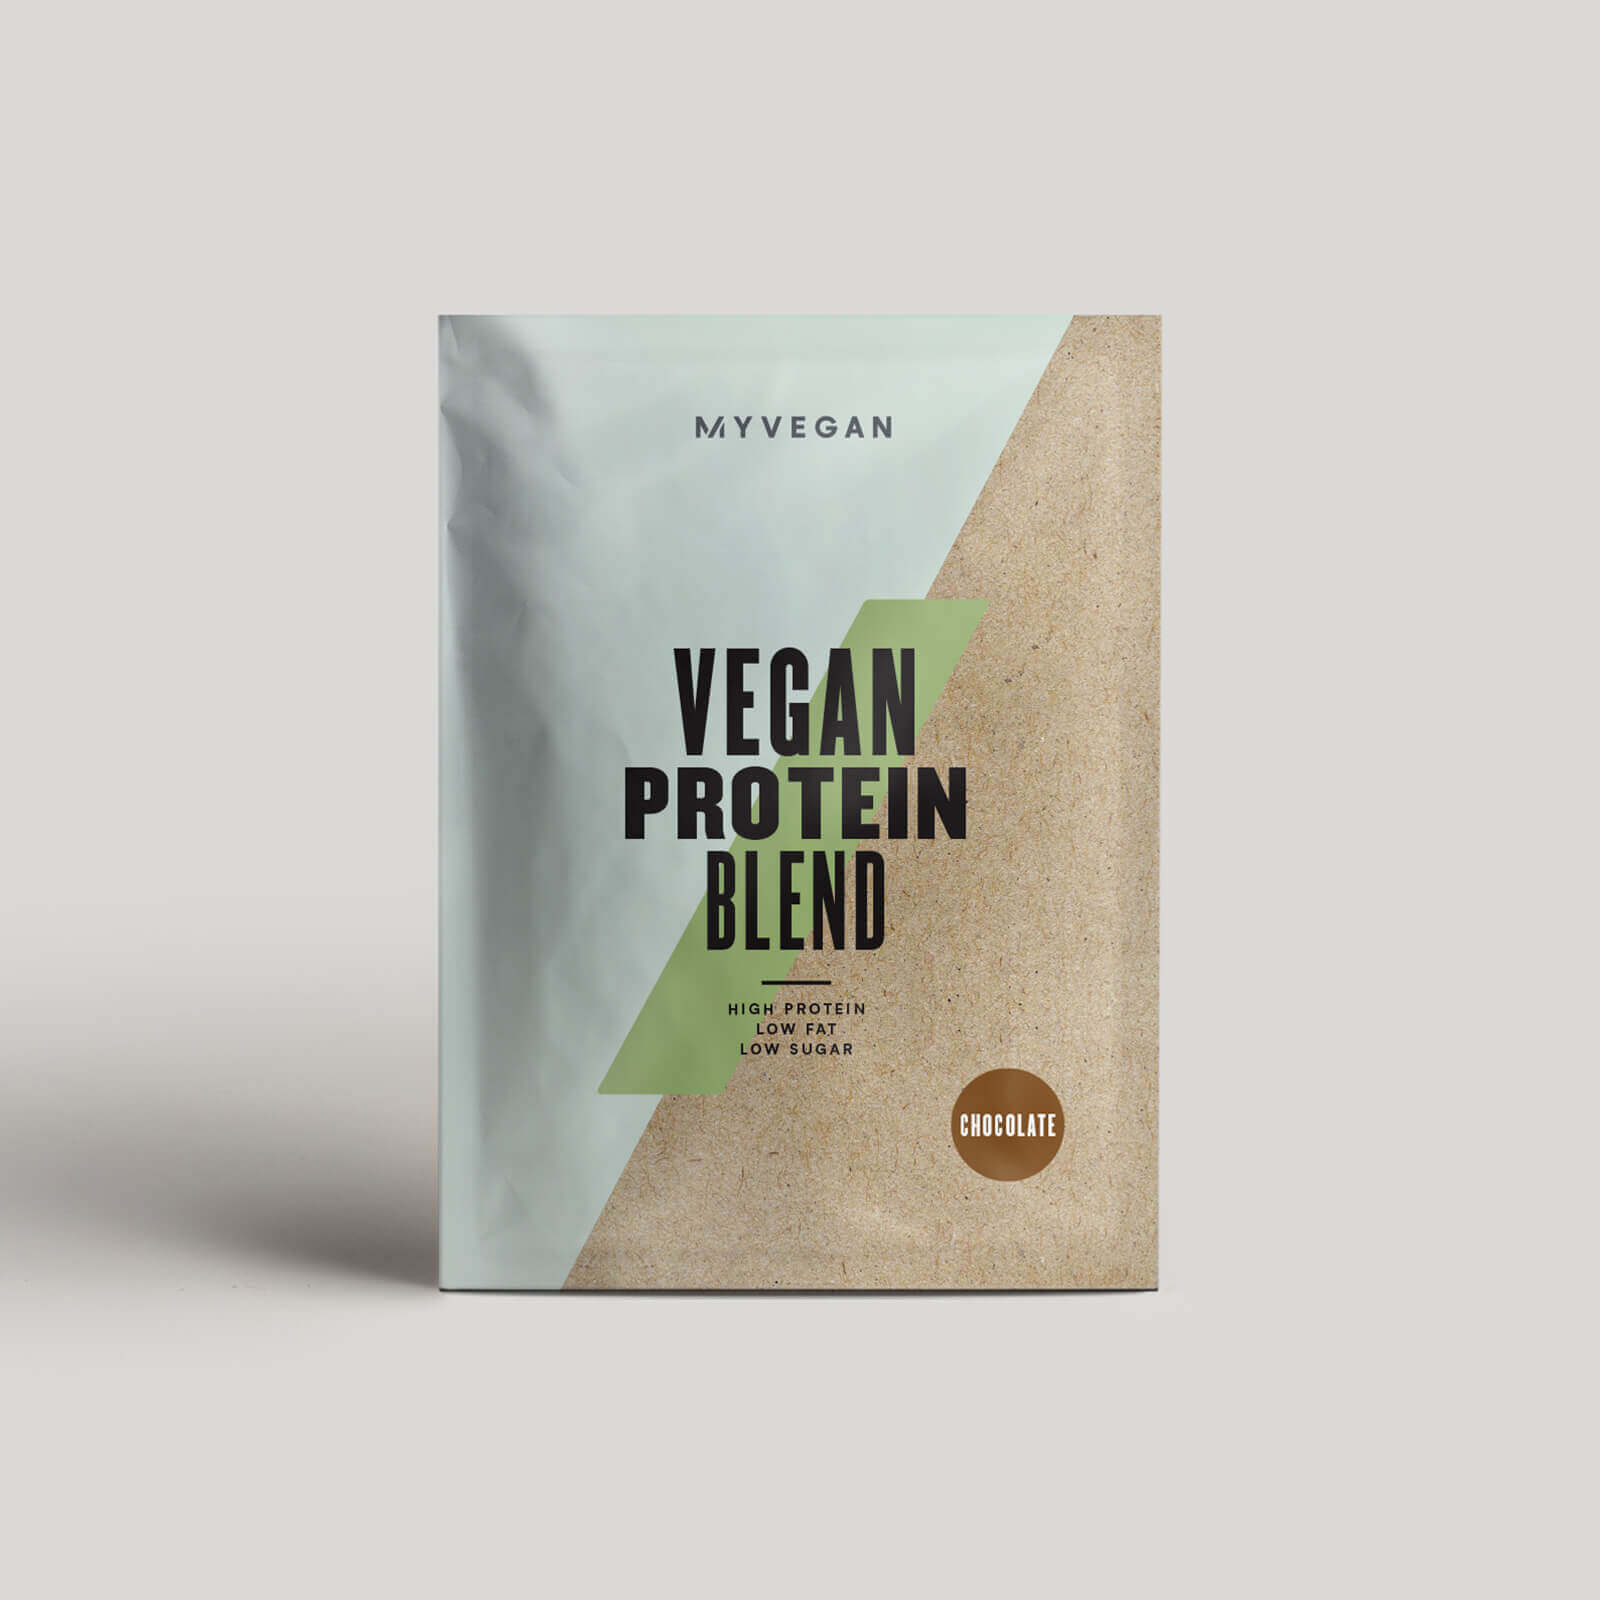 Myvegan Vegan Protein Blend (Sample) - 30g - Chokolade